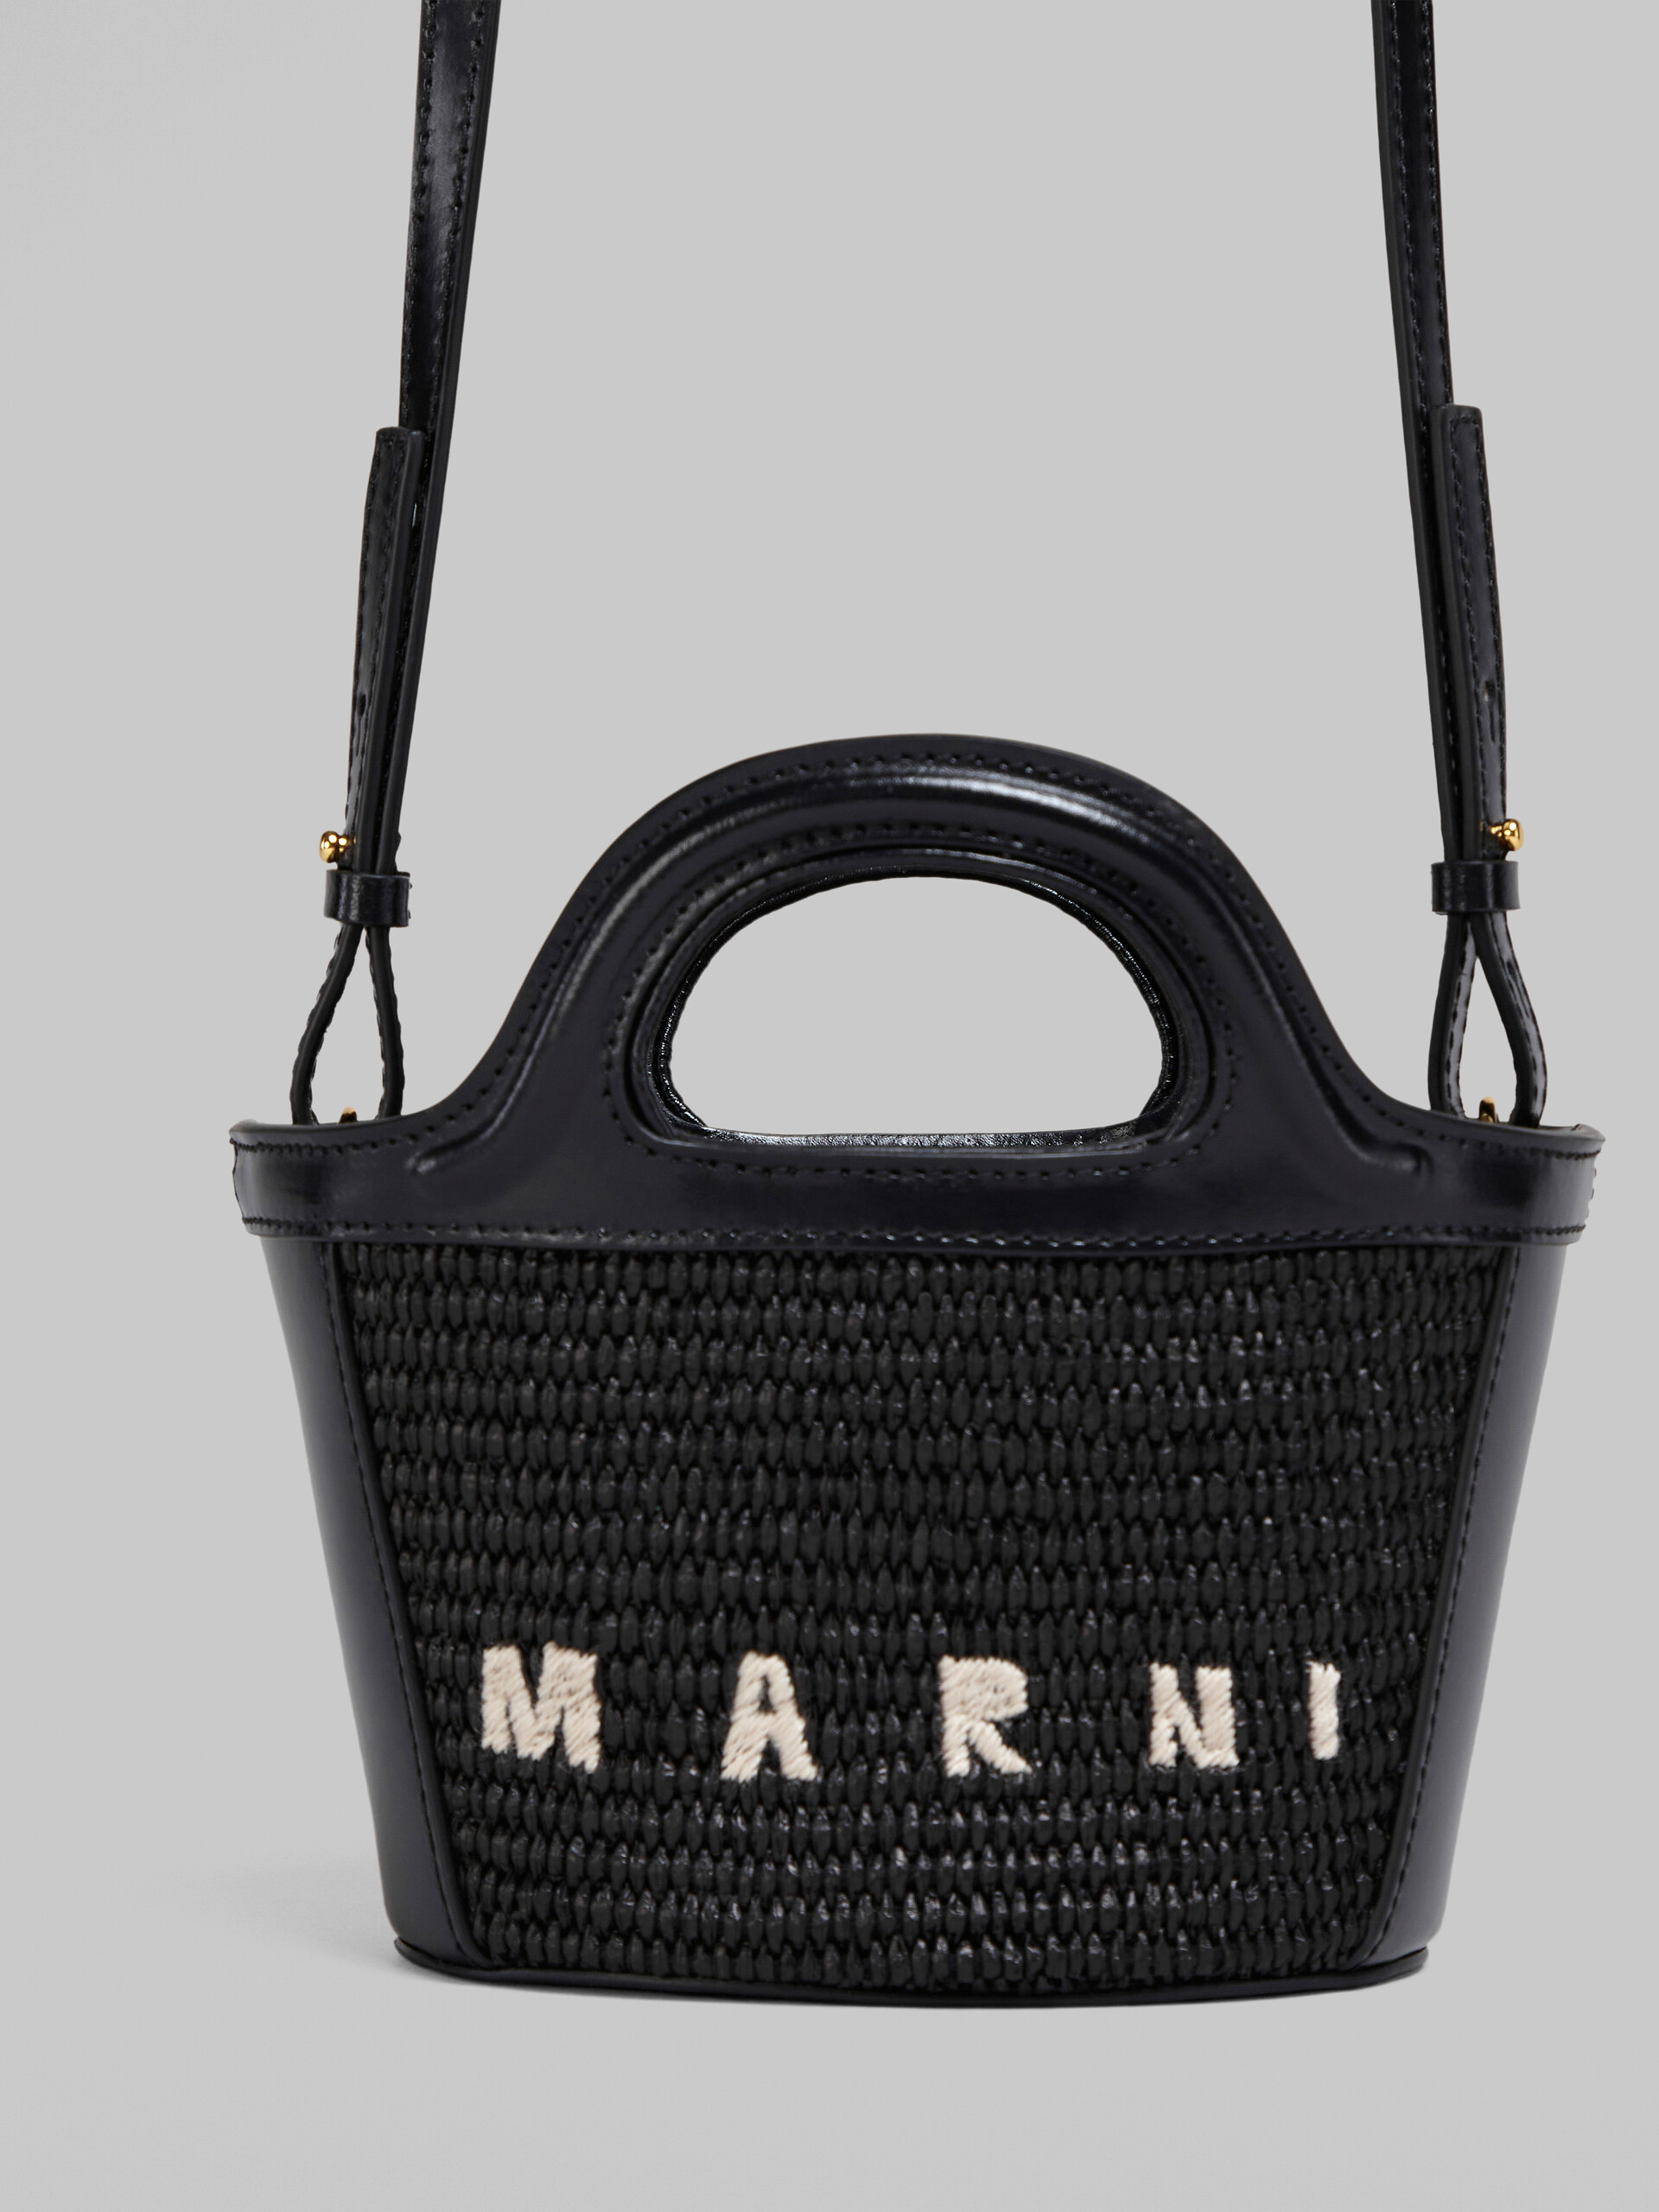 TROPICALIA micro bag in black leather and raffia - Handbag - Image 5